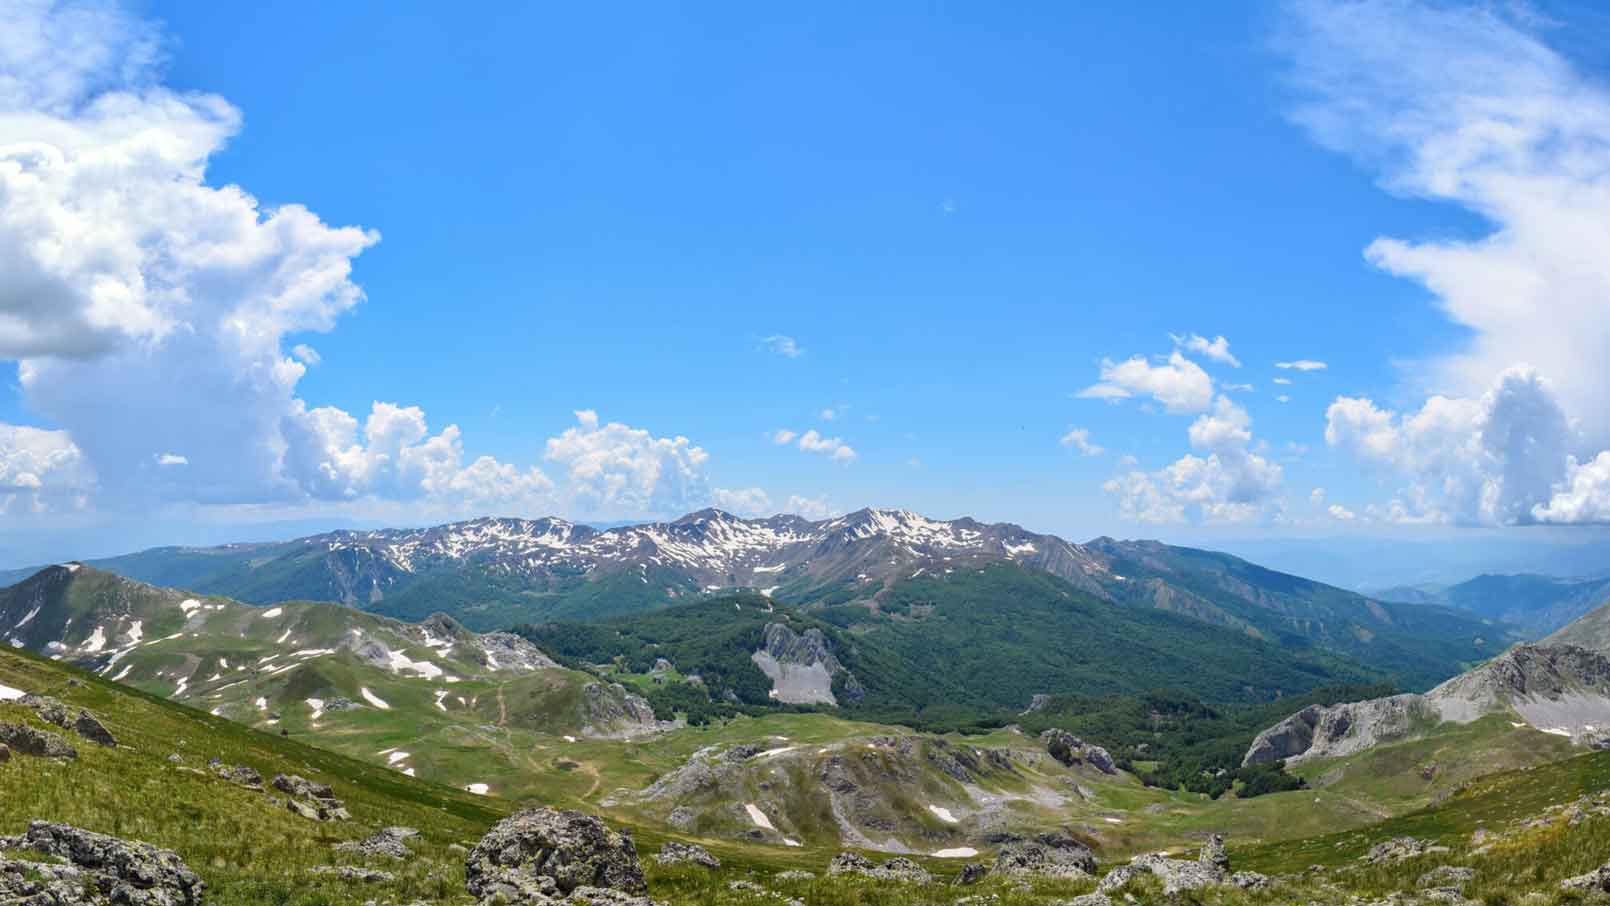 shebenik-jabllanice national park, albania, balkan